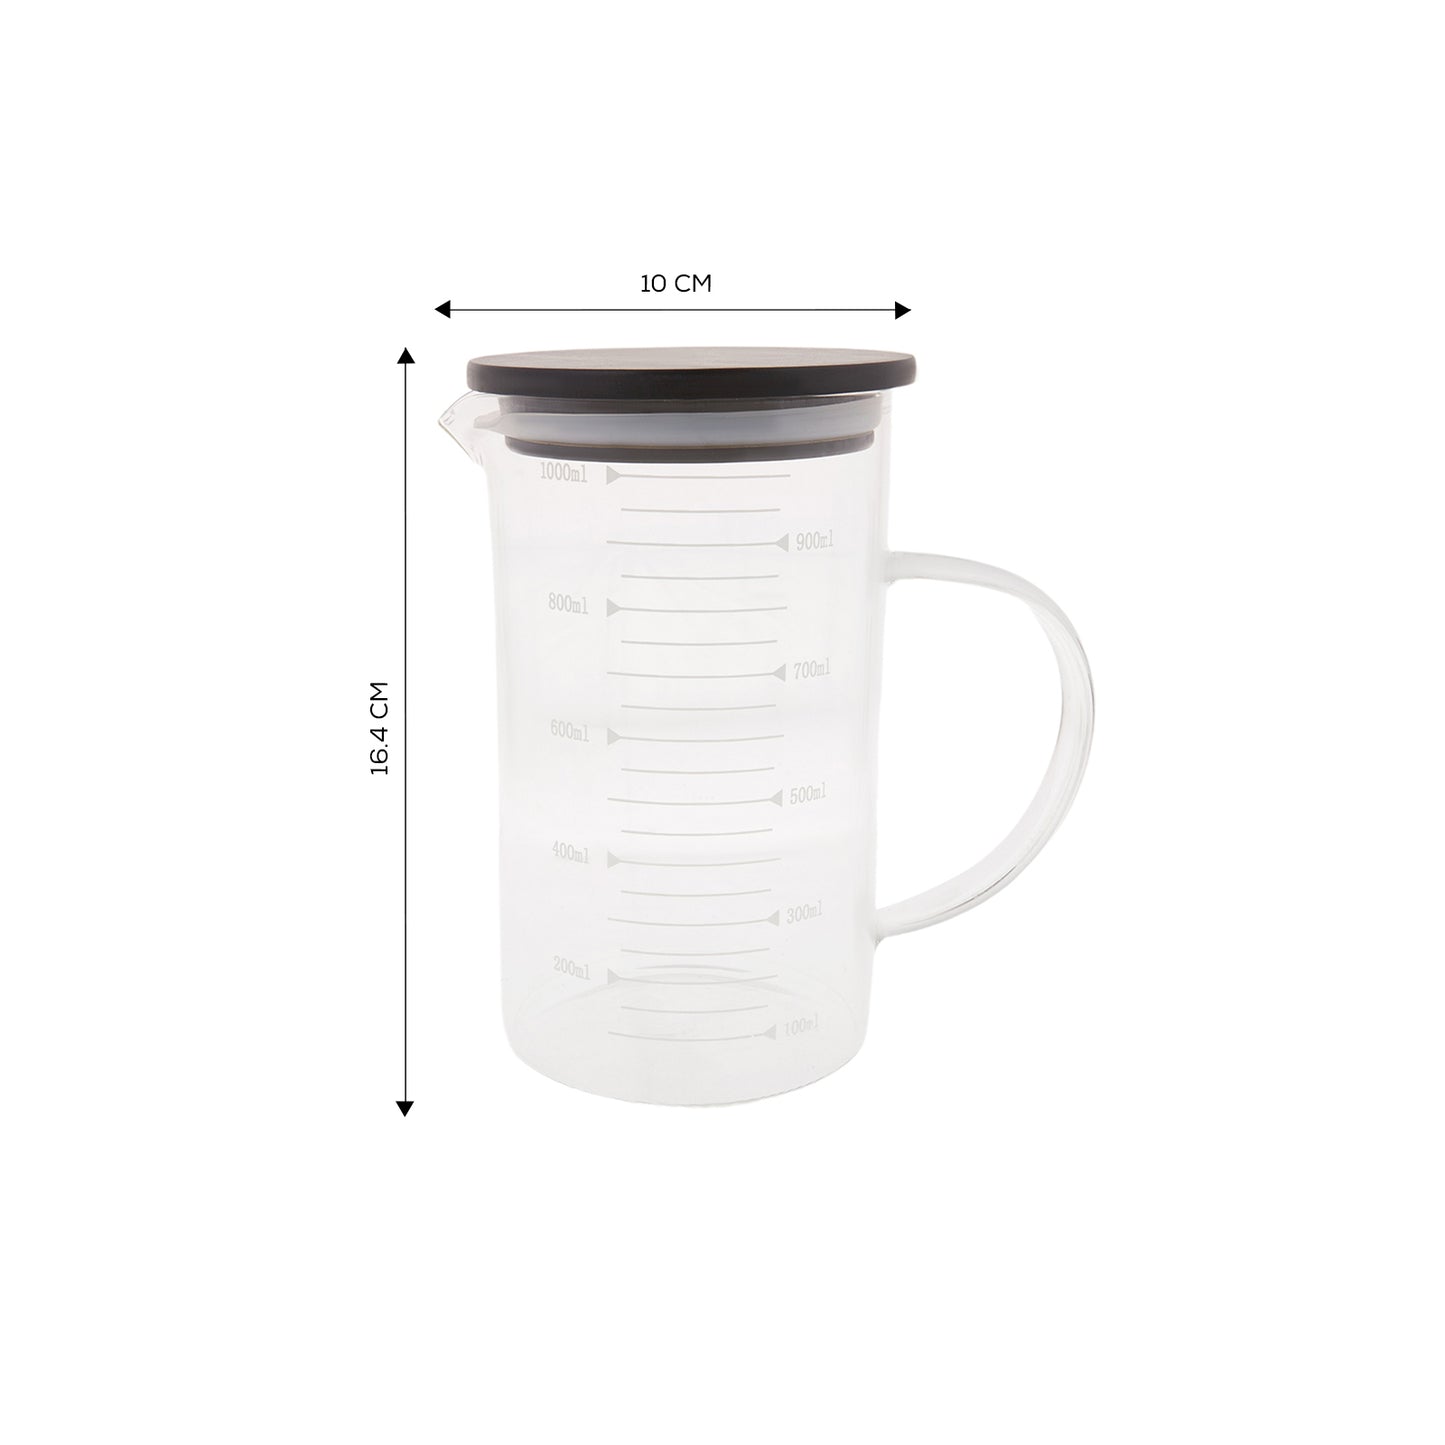 Karaca Sunrise Glass Measuring Cup with Lid, 1000ml, Transparent Black